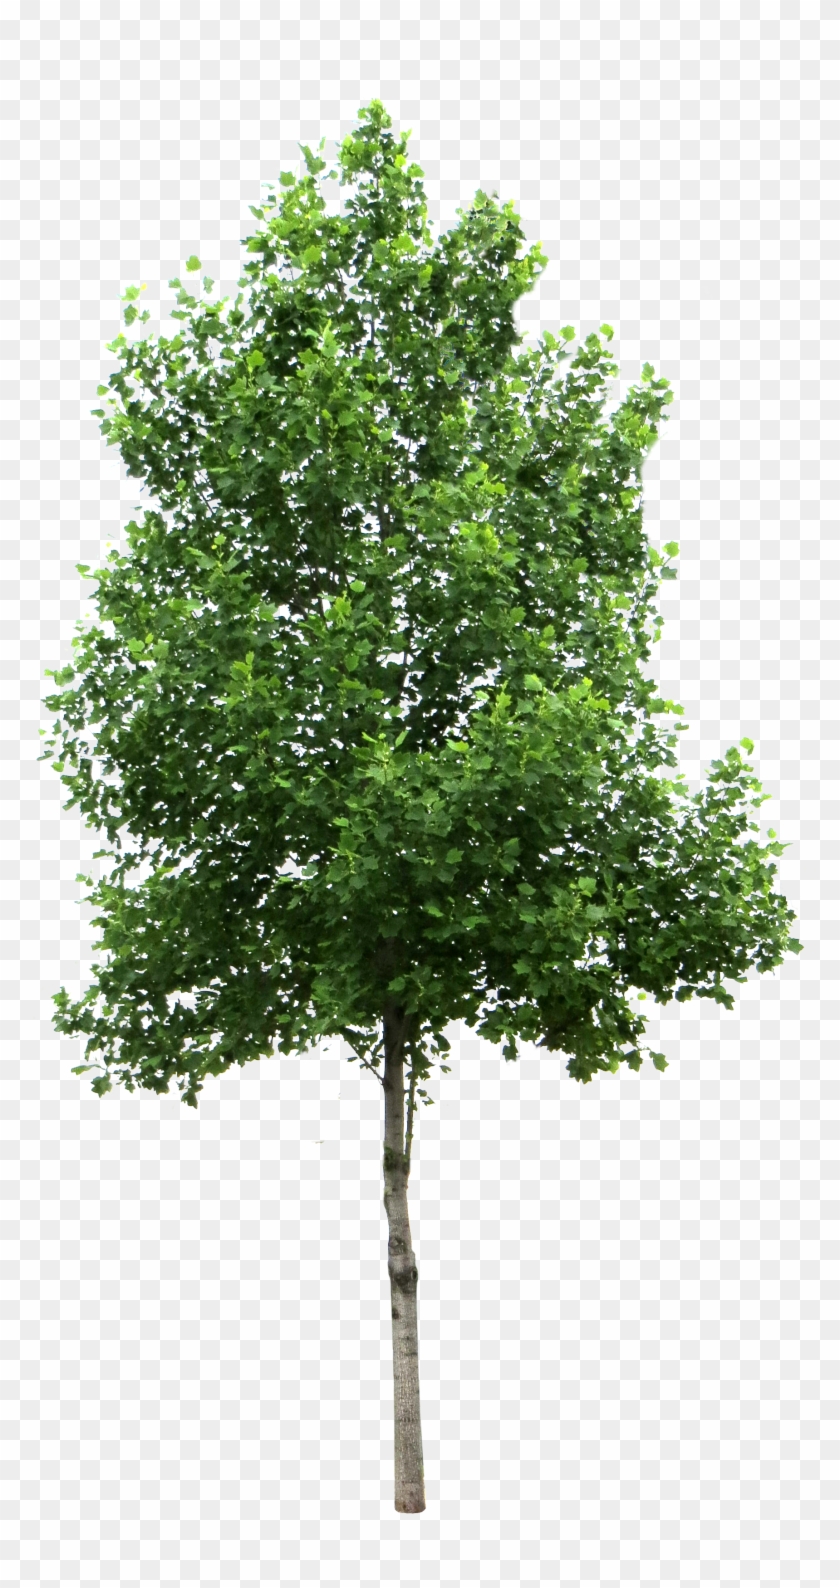 Tree - Birch Tree Png #1010120